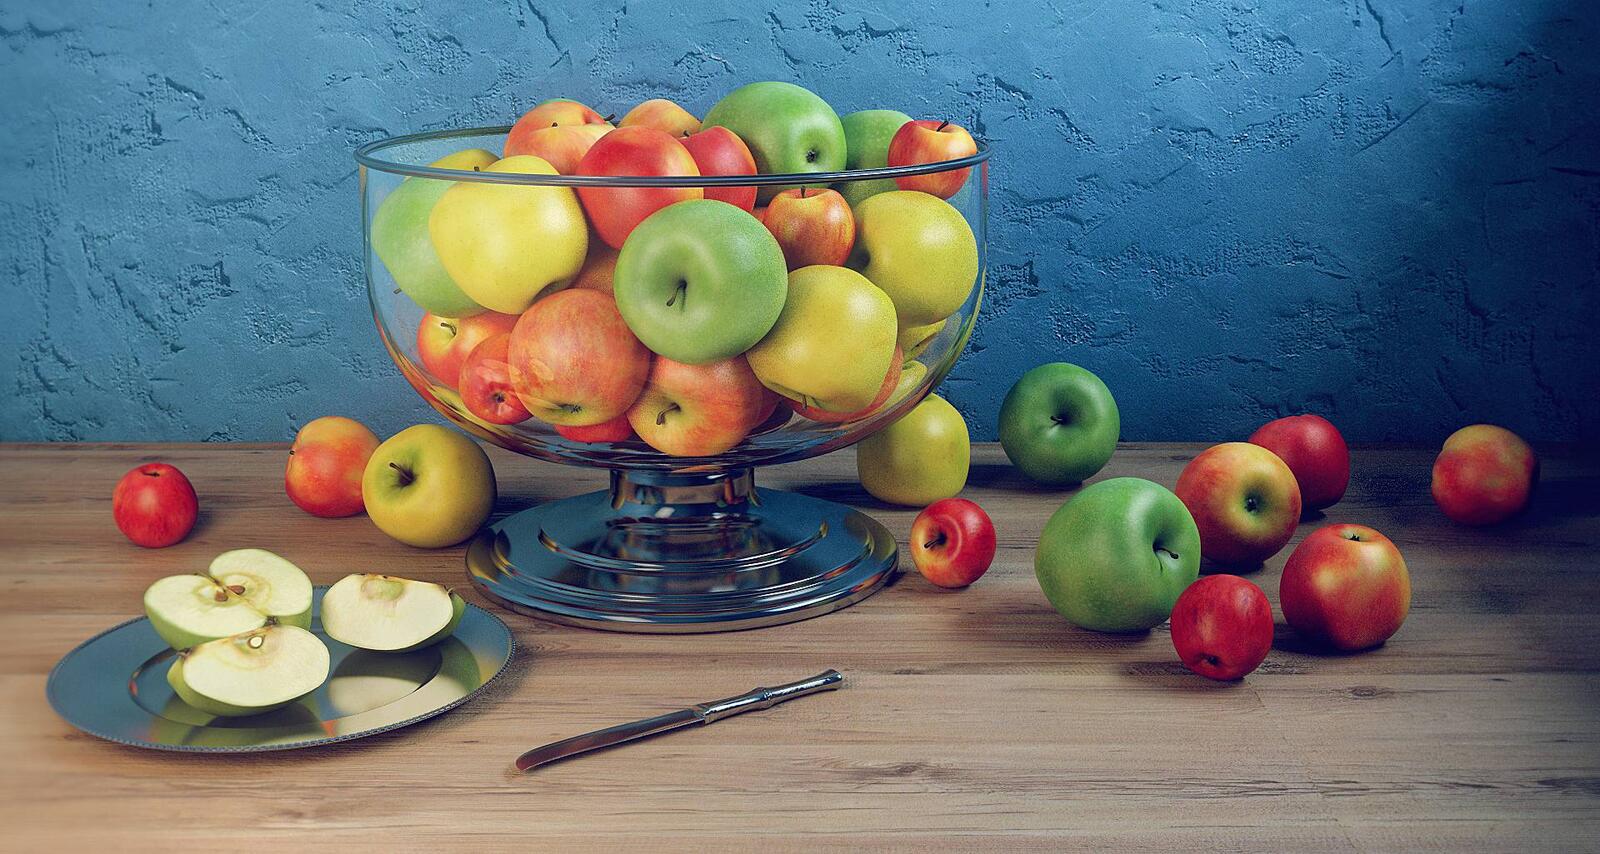 Wallpapers apples fruit still life on the desktop